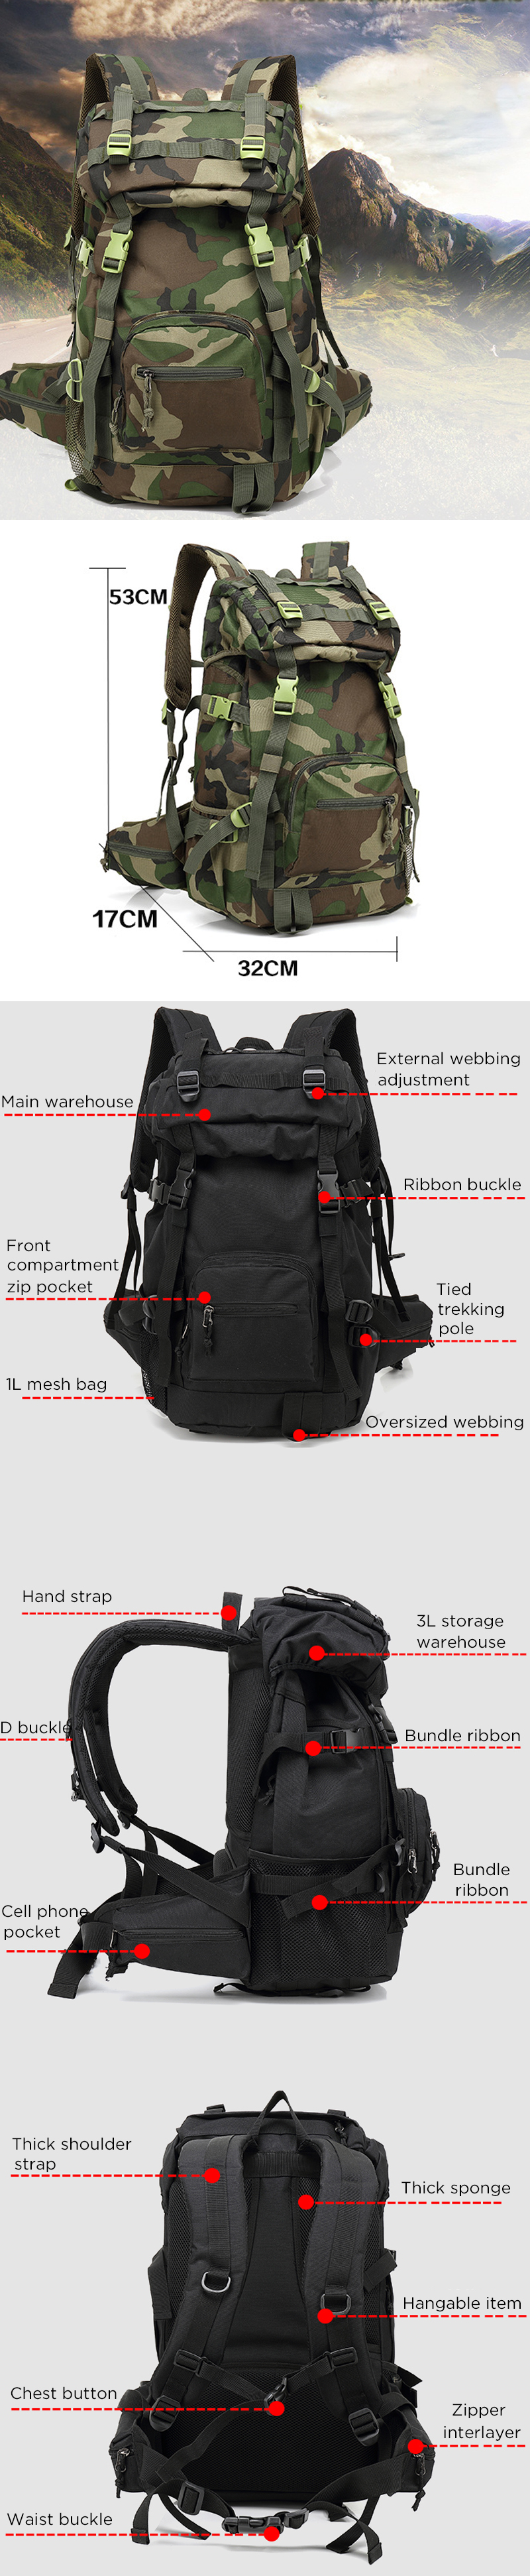 OZUKO-40L-Climbing-Backpack-Waterproof-Nylon-Rucksack-Camping-Travel-Hiking-Shoulder-Bag-Max-Load-40-1567412-1